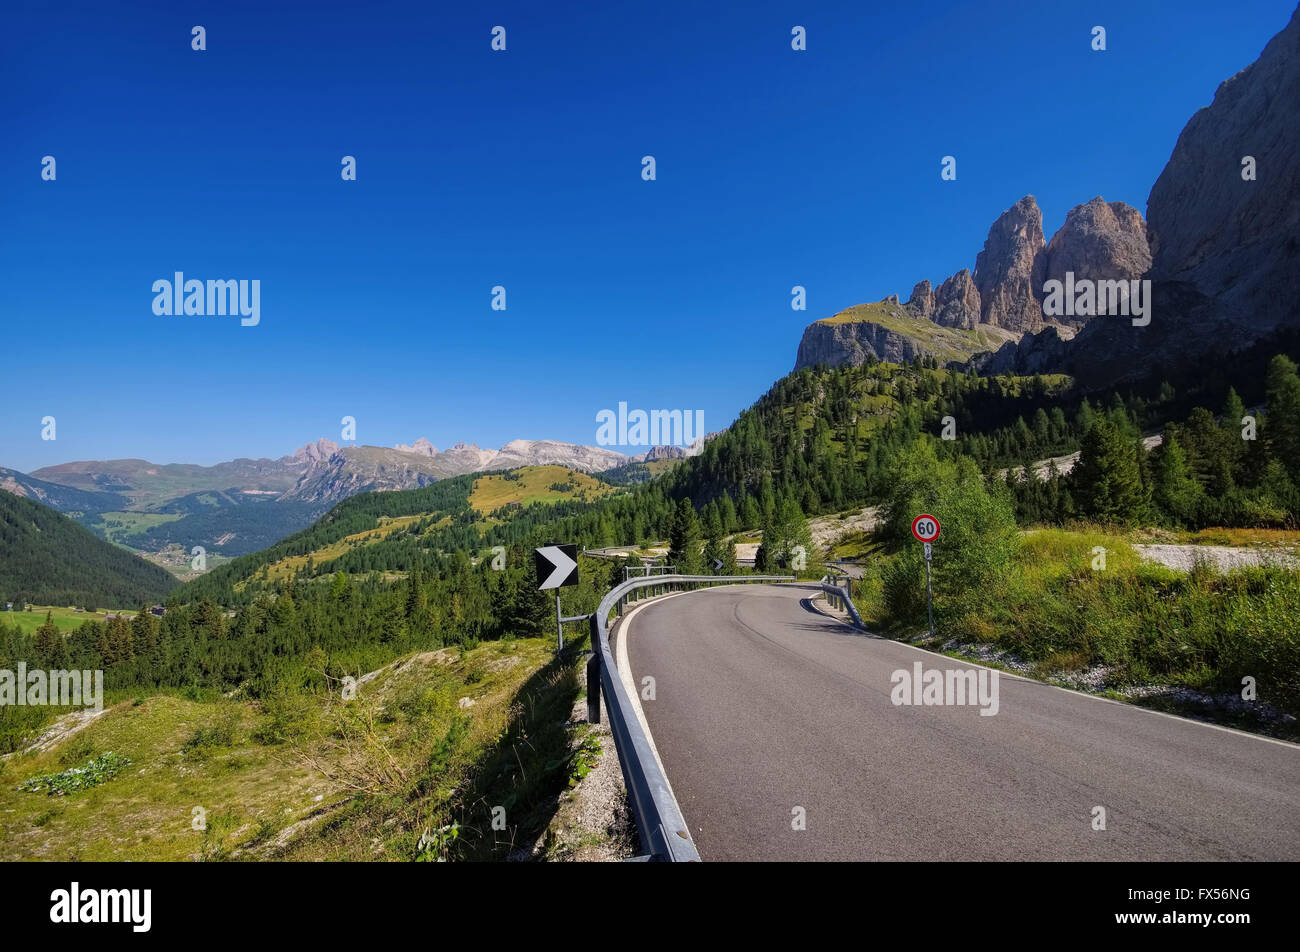 Sellajoch in den Dolomiten, von Alpen - Sella pass en Dolomites, Alpes italiennes Banque D'Images